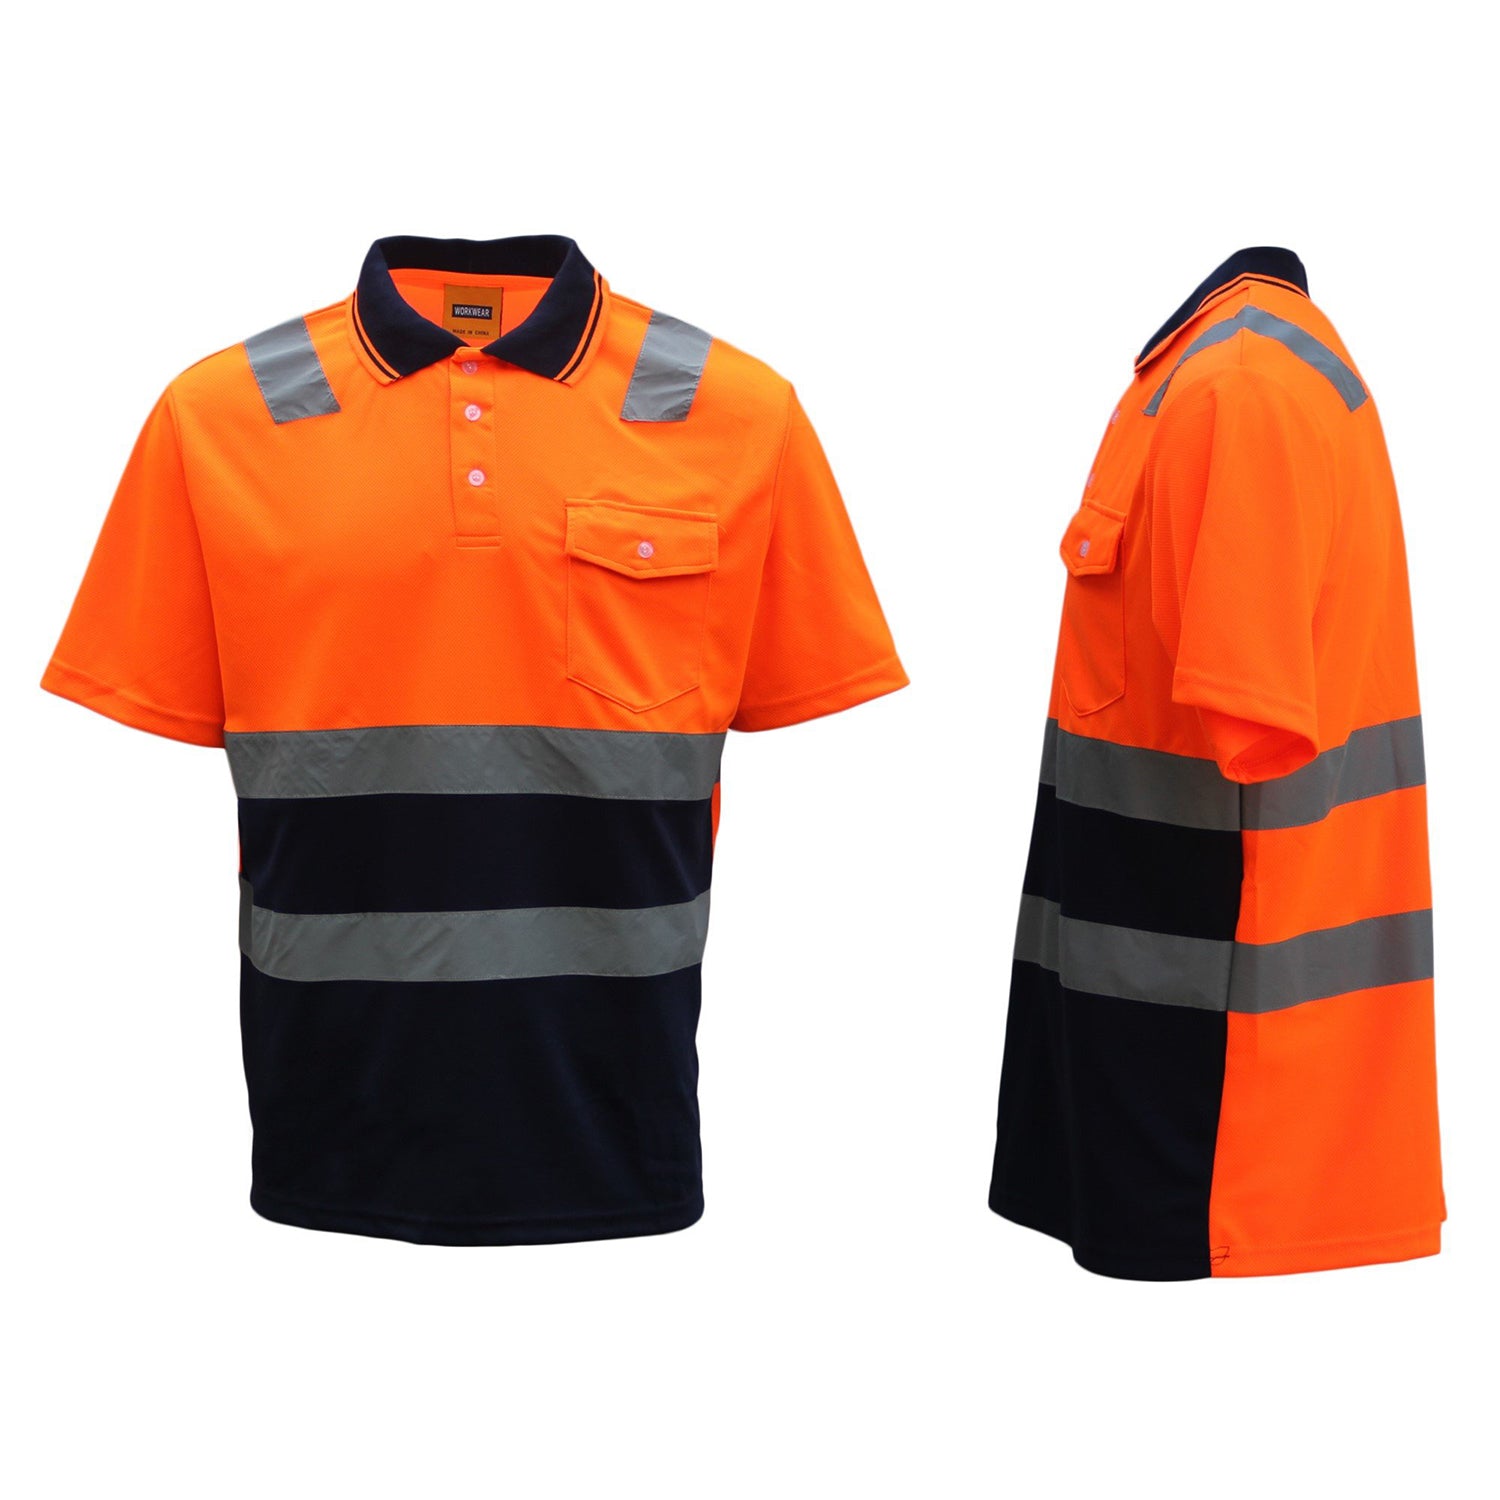 HI VIS Short Sleeve Workwear Shirt w Reflective Tape Cool Dry Safety Polo 2 Tone, Fluoro Orange / Navy, M